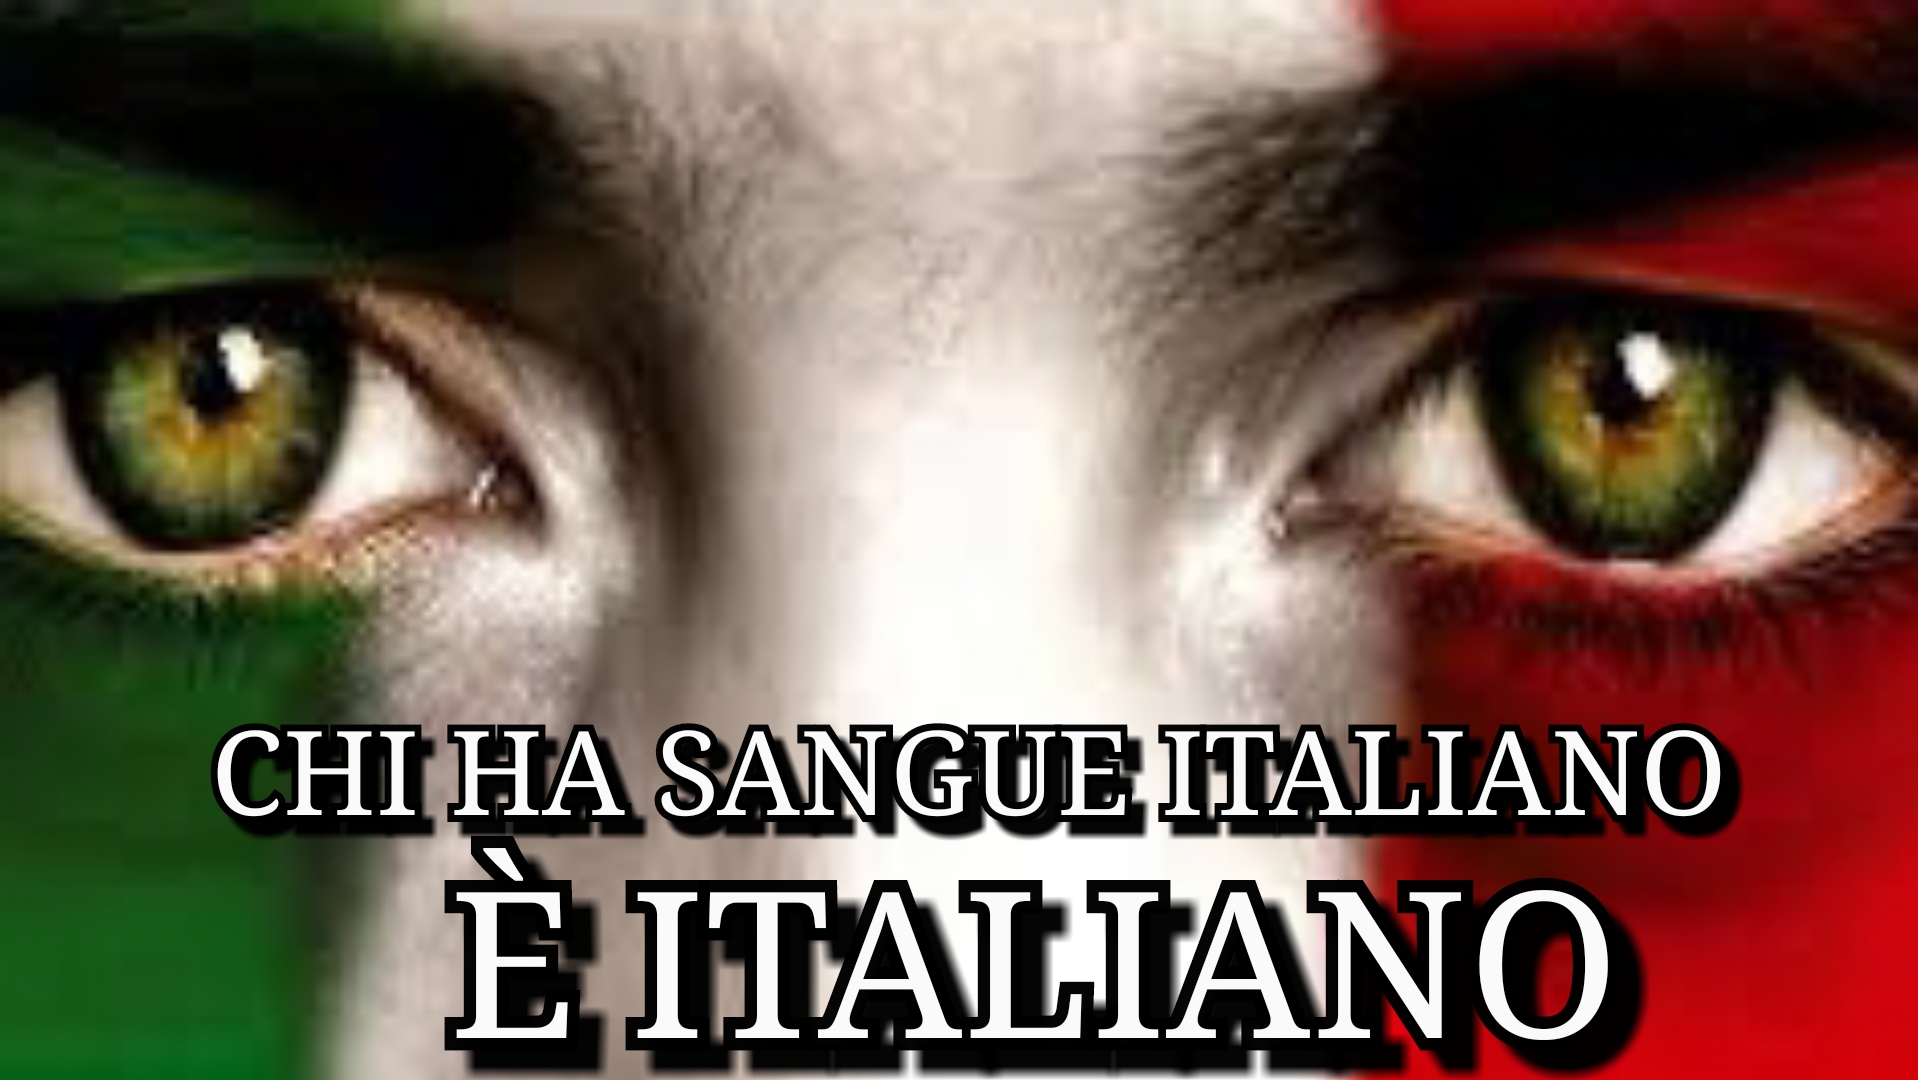 Cittadinanza italiana ius sanguinis, sangue italiano